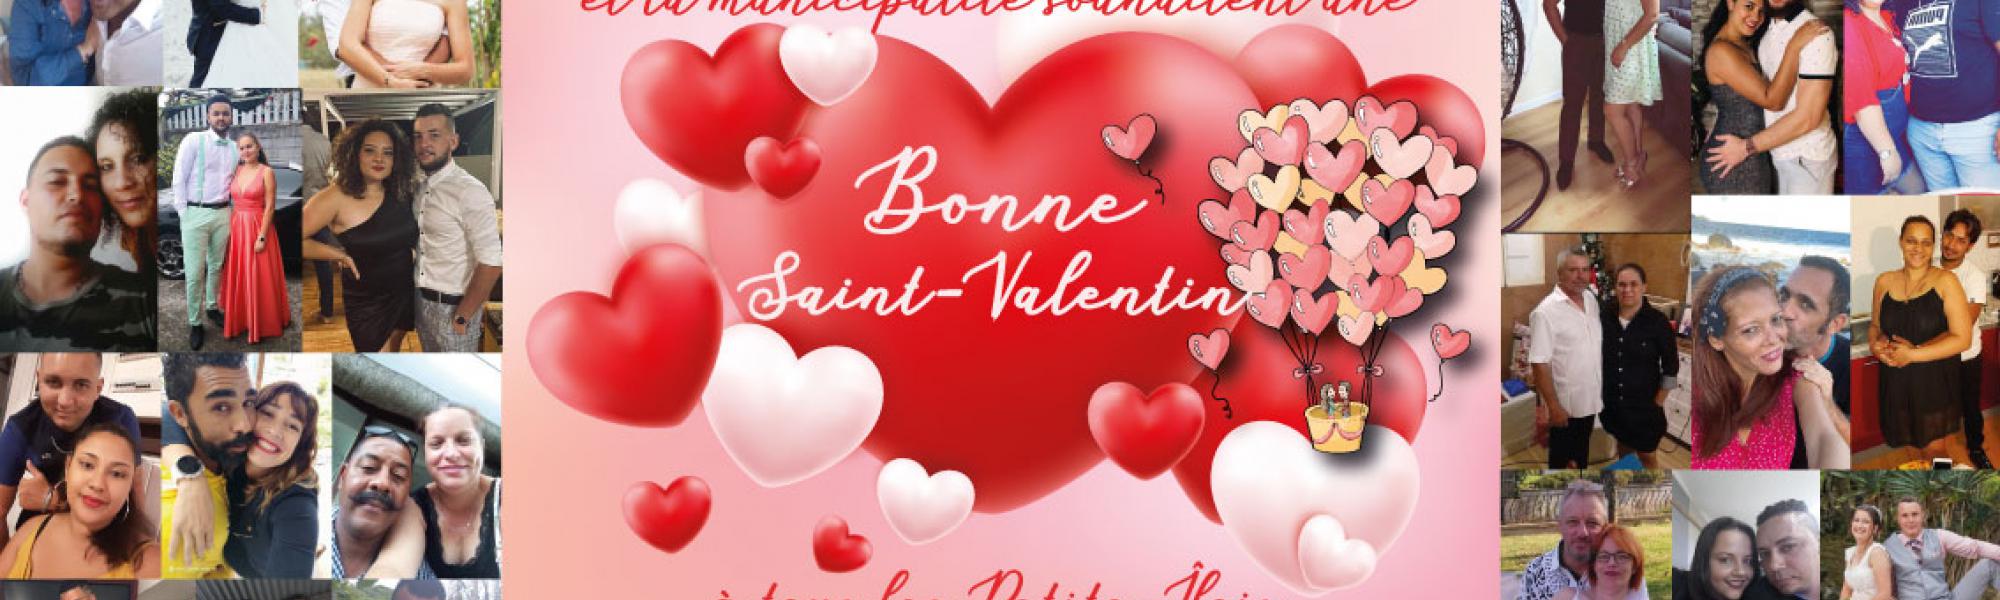 Affiche Saint-Valentin